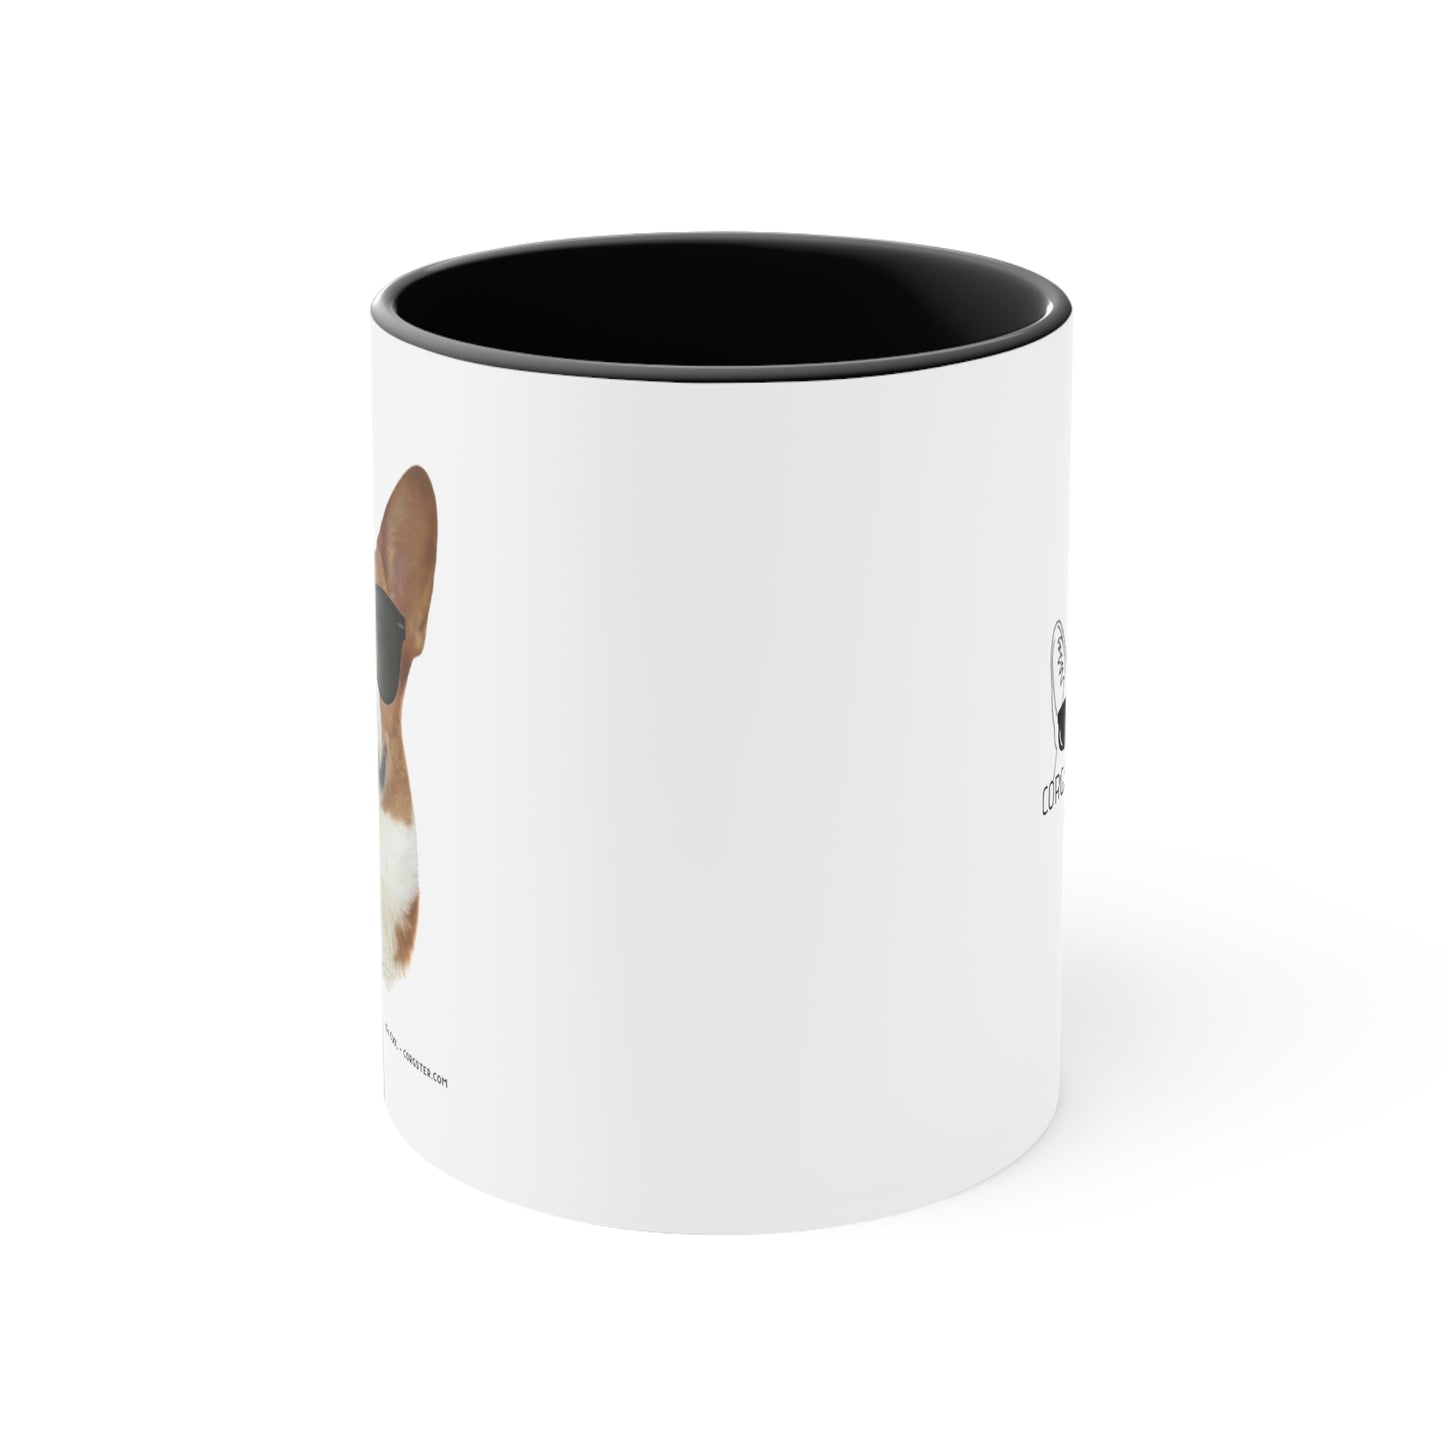 Cardigan Cool - Authentic Corgsters Coffee Mug, 11oz